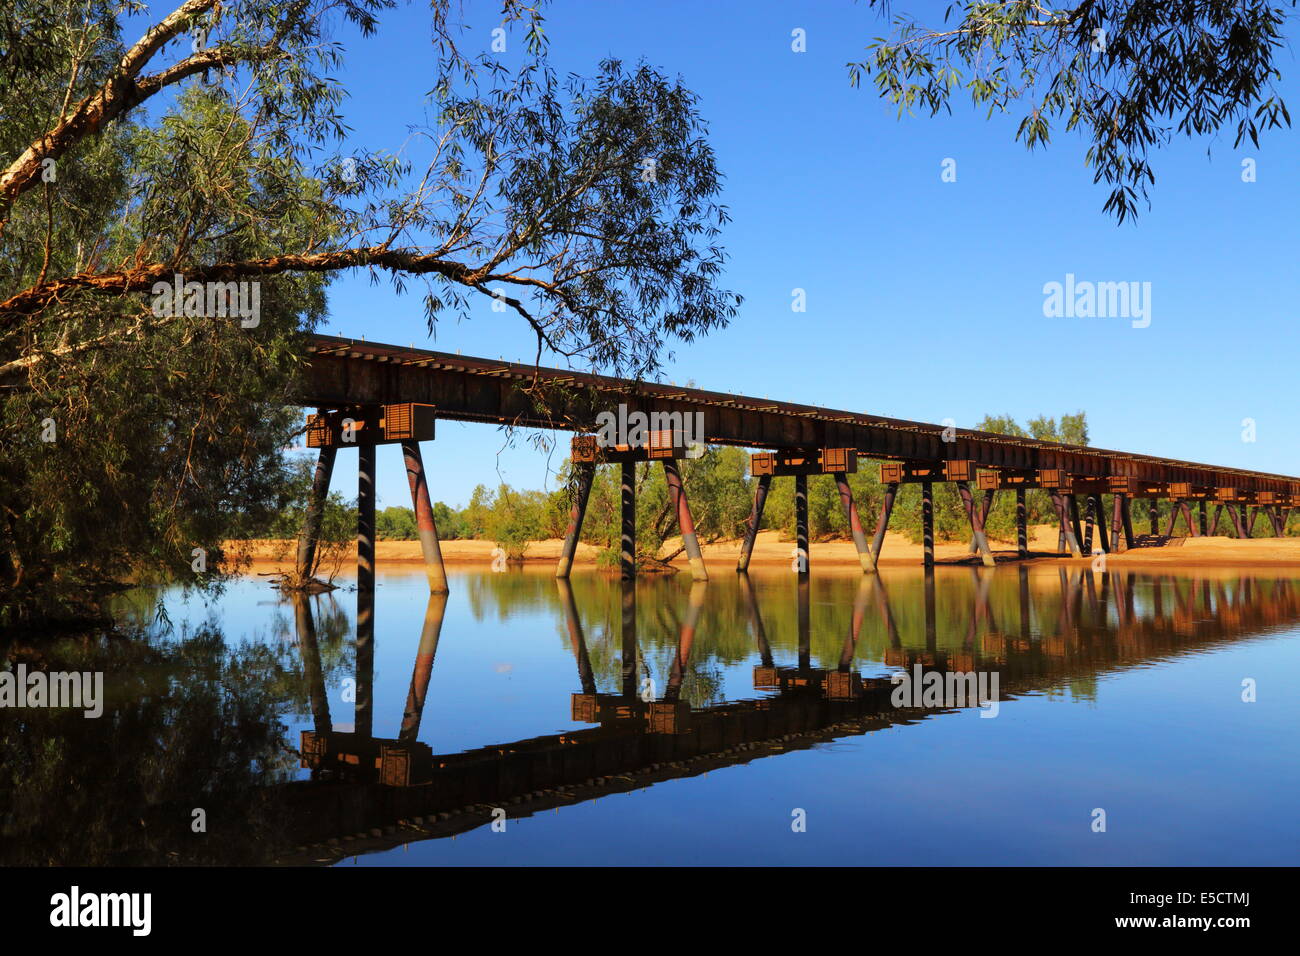 The De Grey River railway bridge in Western Australia. Stock Photo